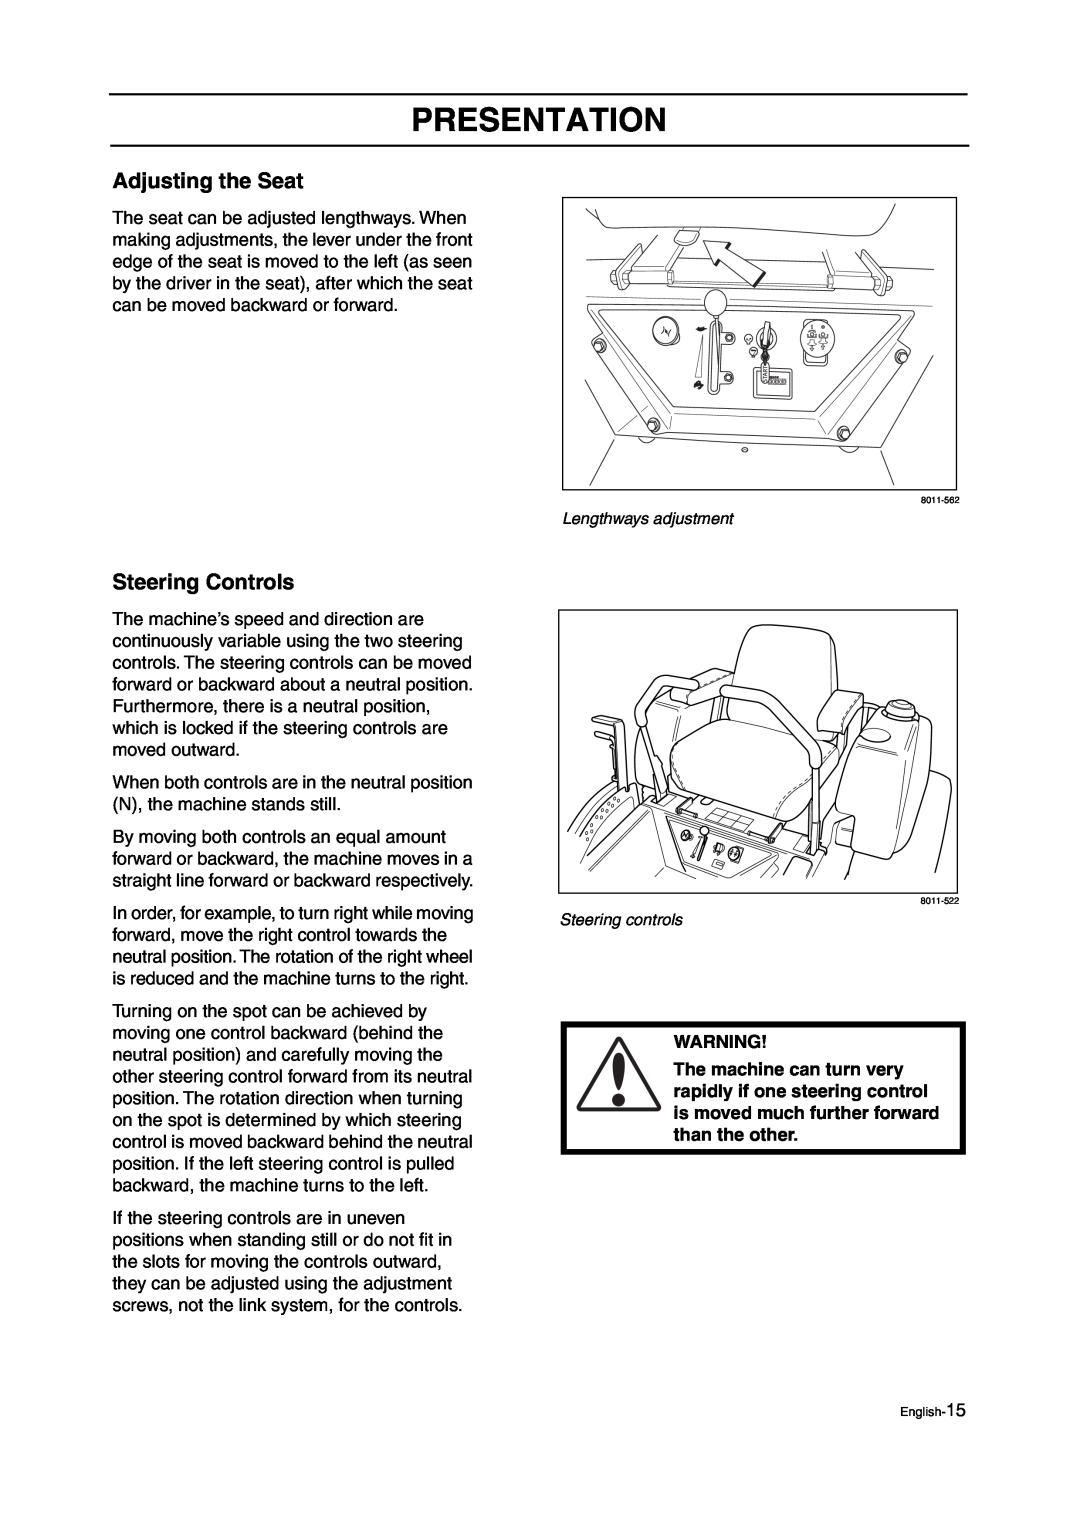 Husqvarna ZTH manual Adjusting the Seat, Steering Controls, Presentation, Lengthways adjustment, Steering controls 